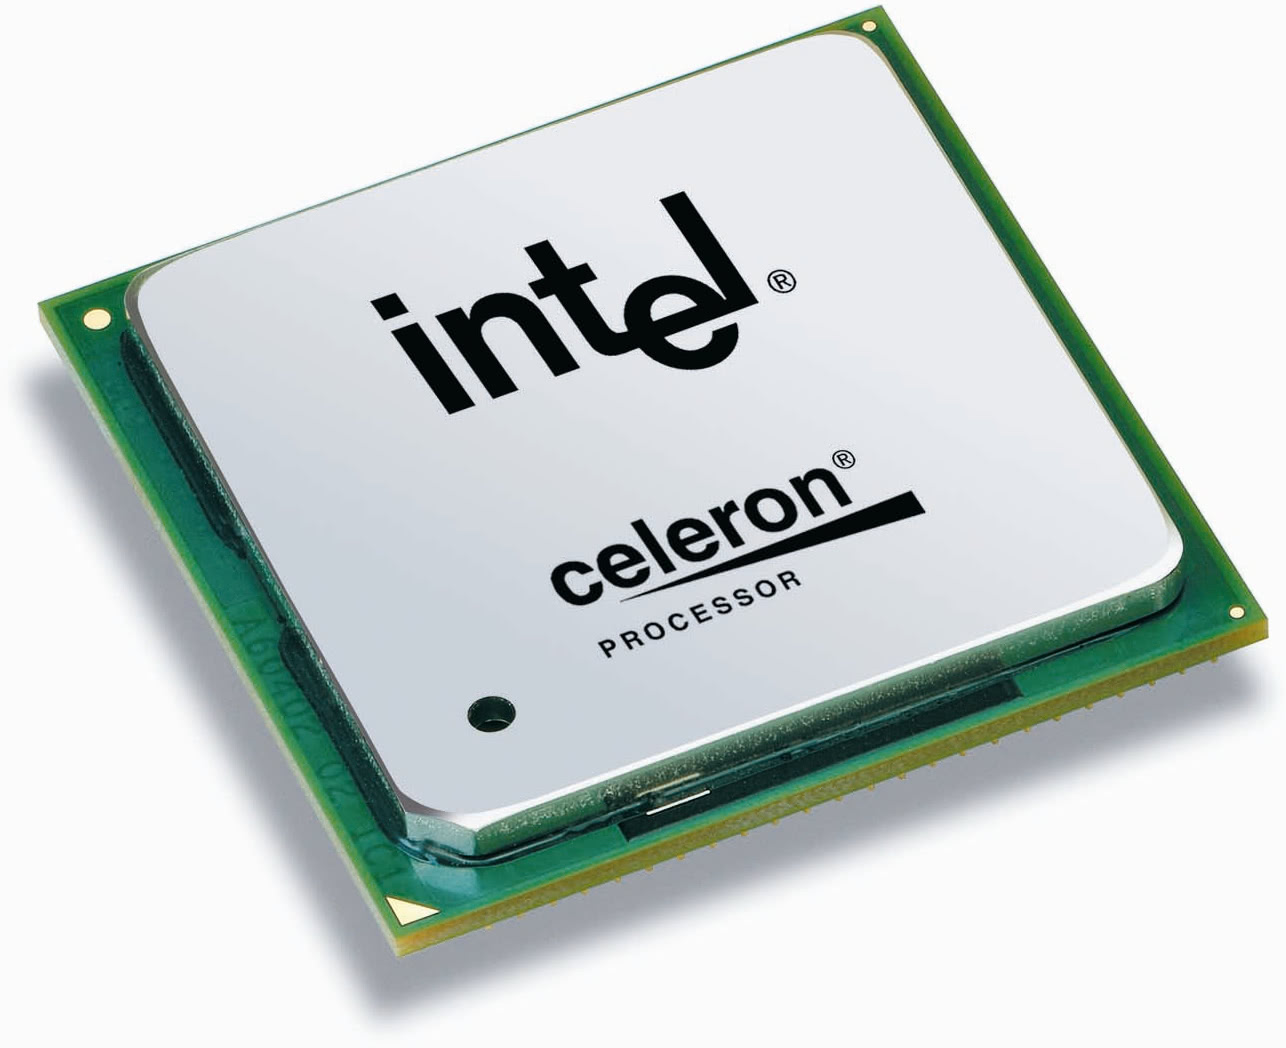 Procesor Intel Celeron P4600 2.00GHz, 2MB Cache